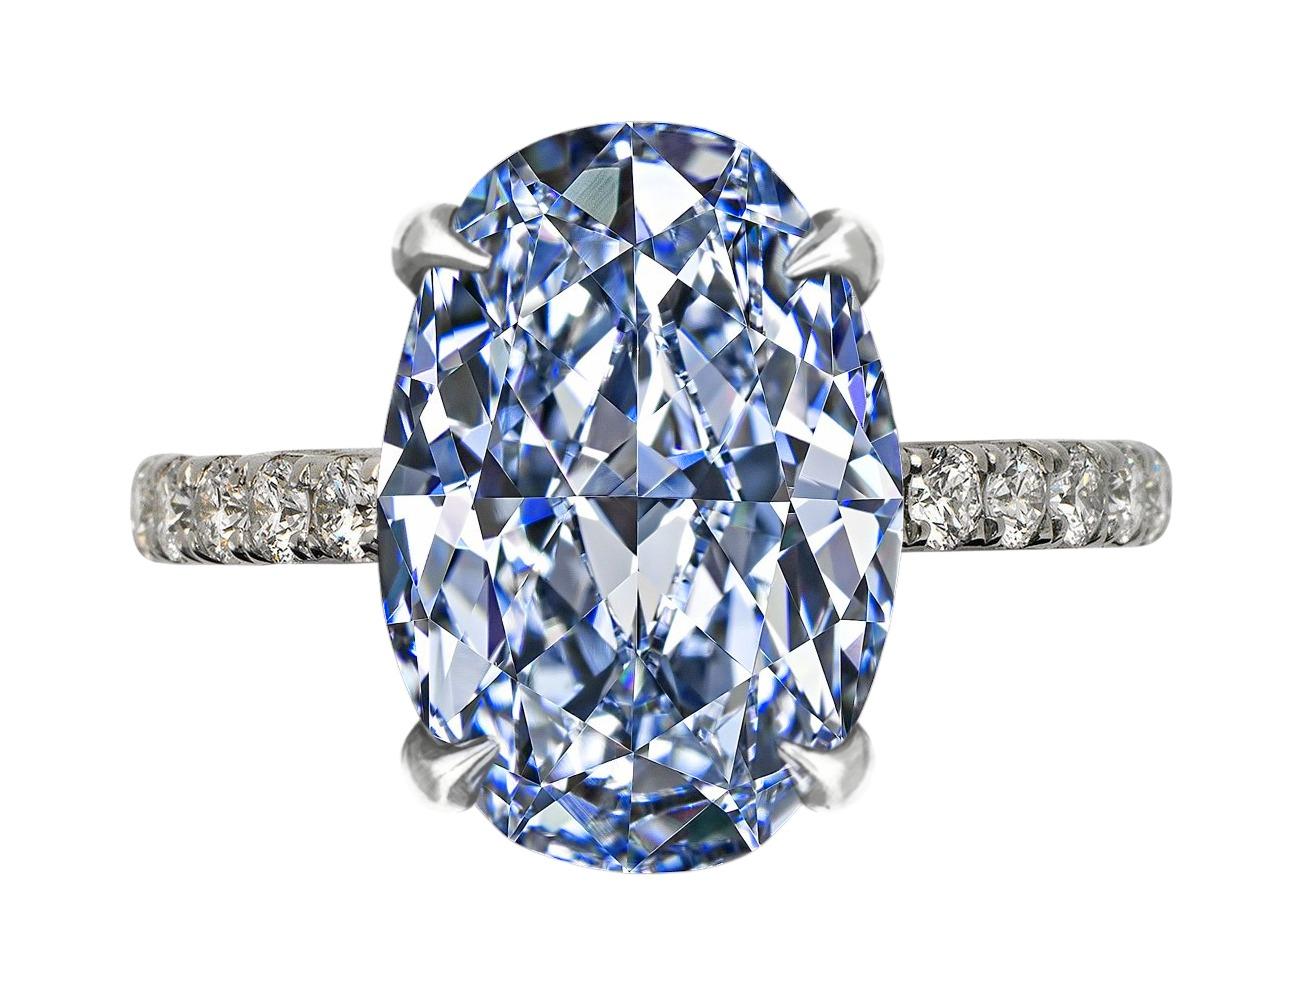 2 carat blue diamond